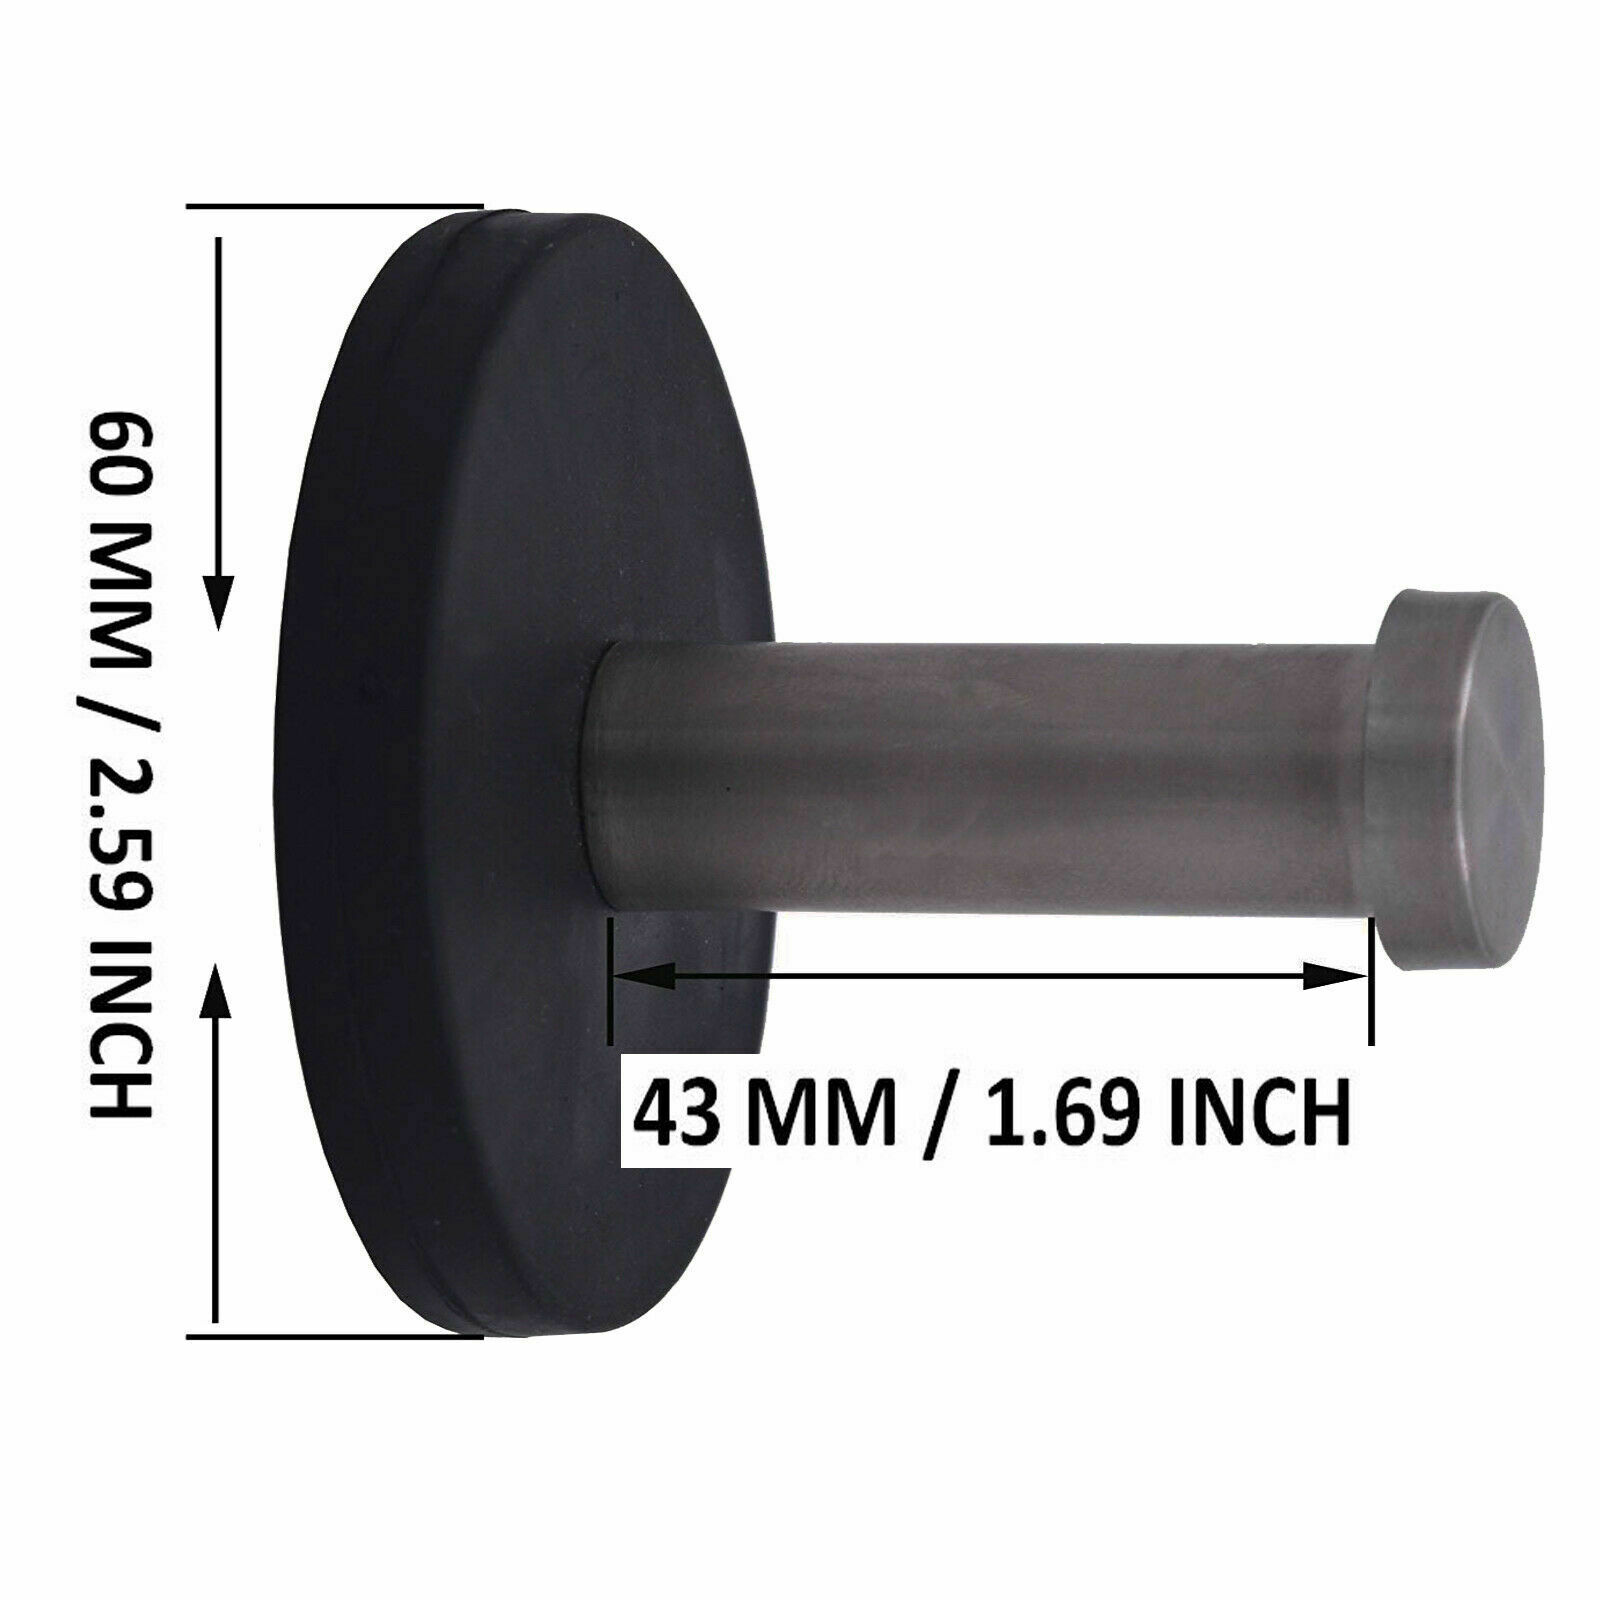 4x Large Strong Fridge Magnets Holder Hooks Magnetic Crafts Whiteboard Push Pins